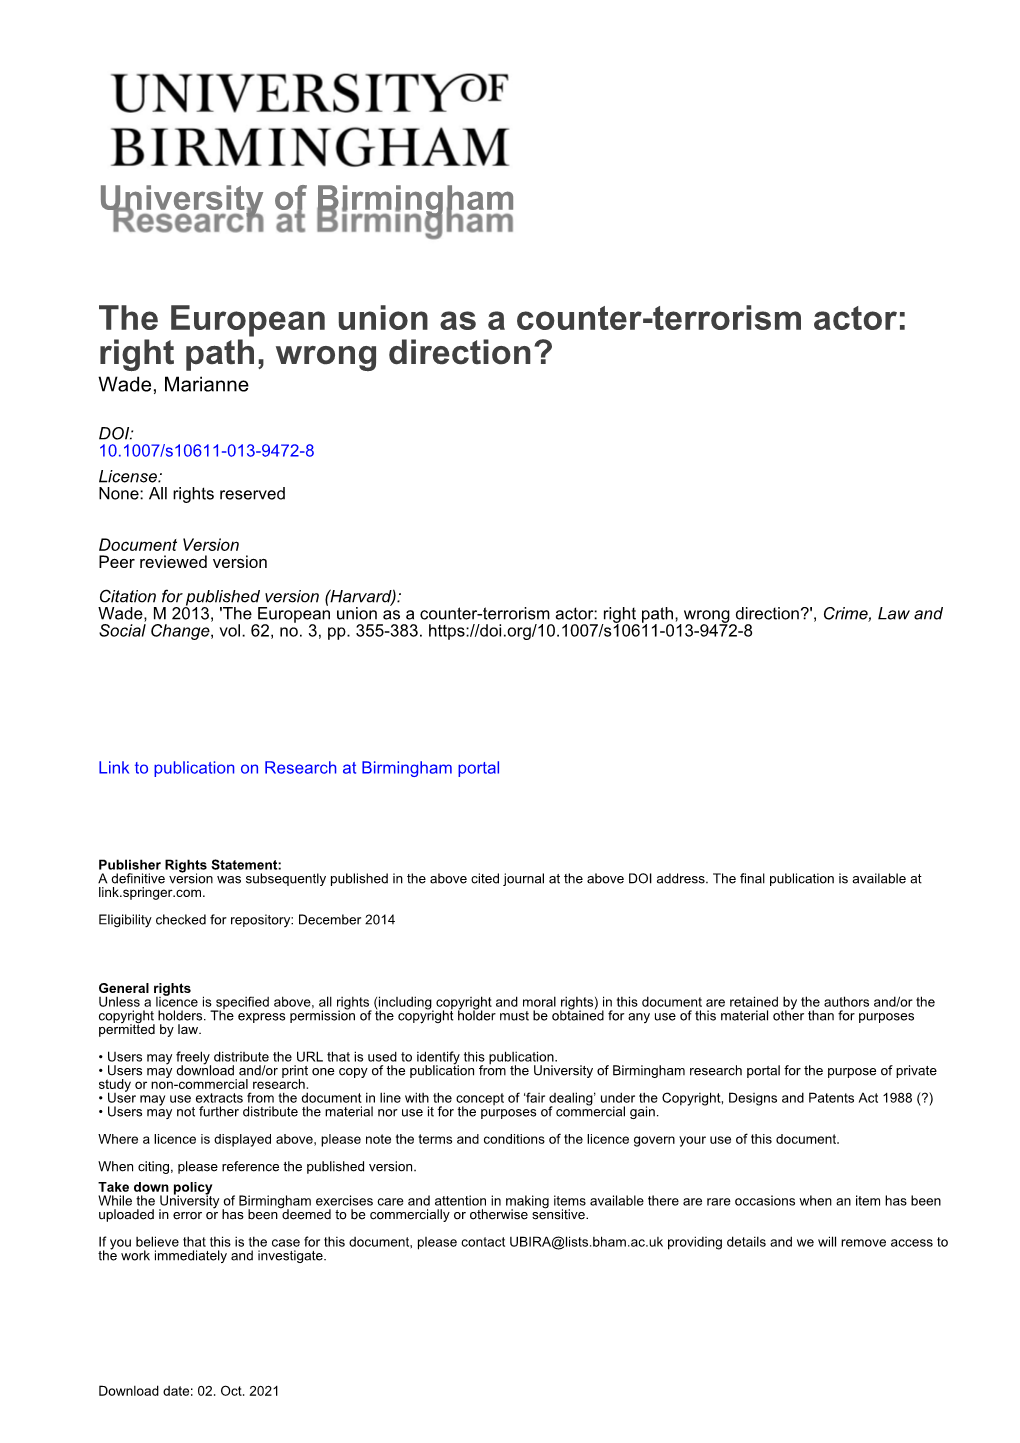 University of Birmingham the European Union As a Counter-Terrorism Actor